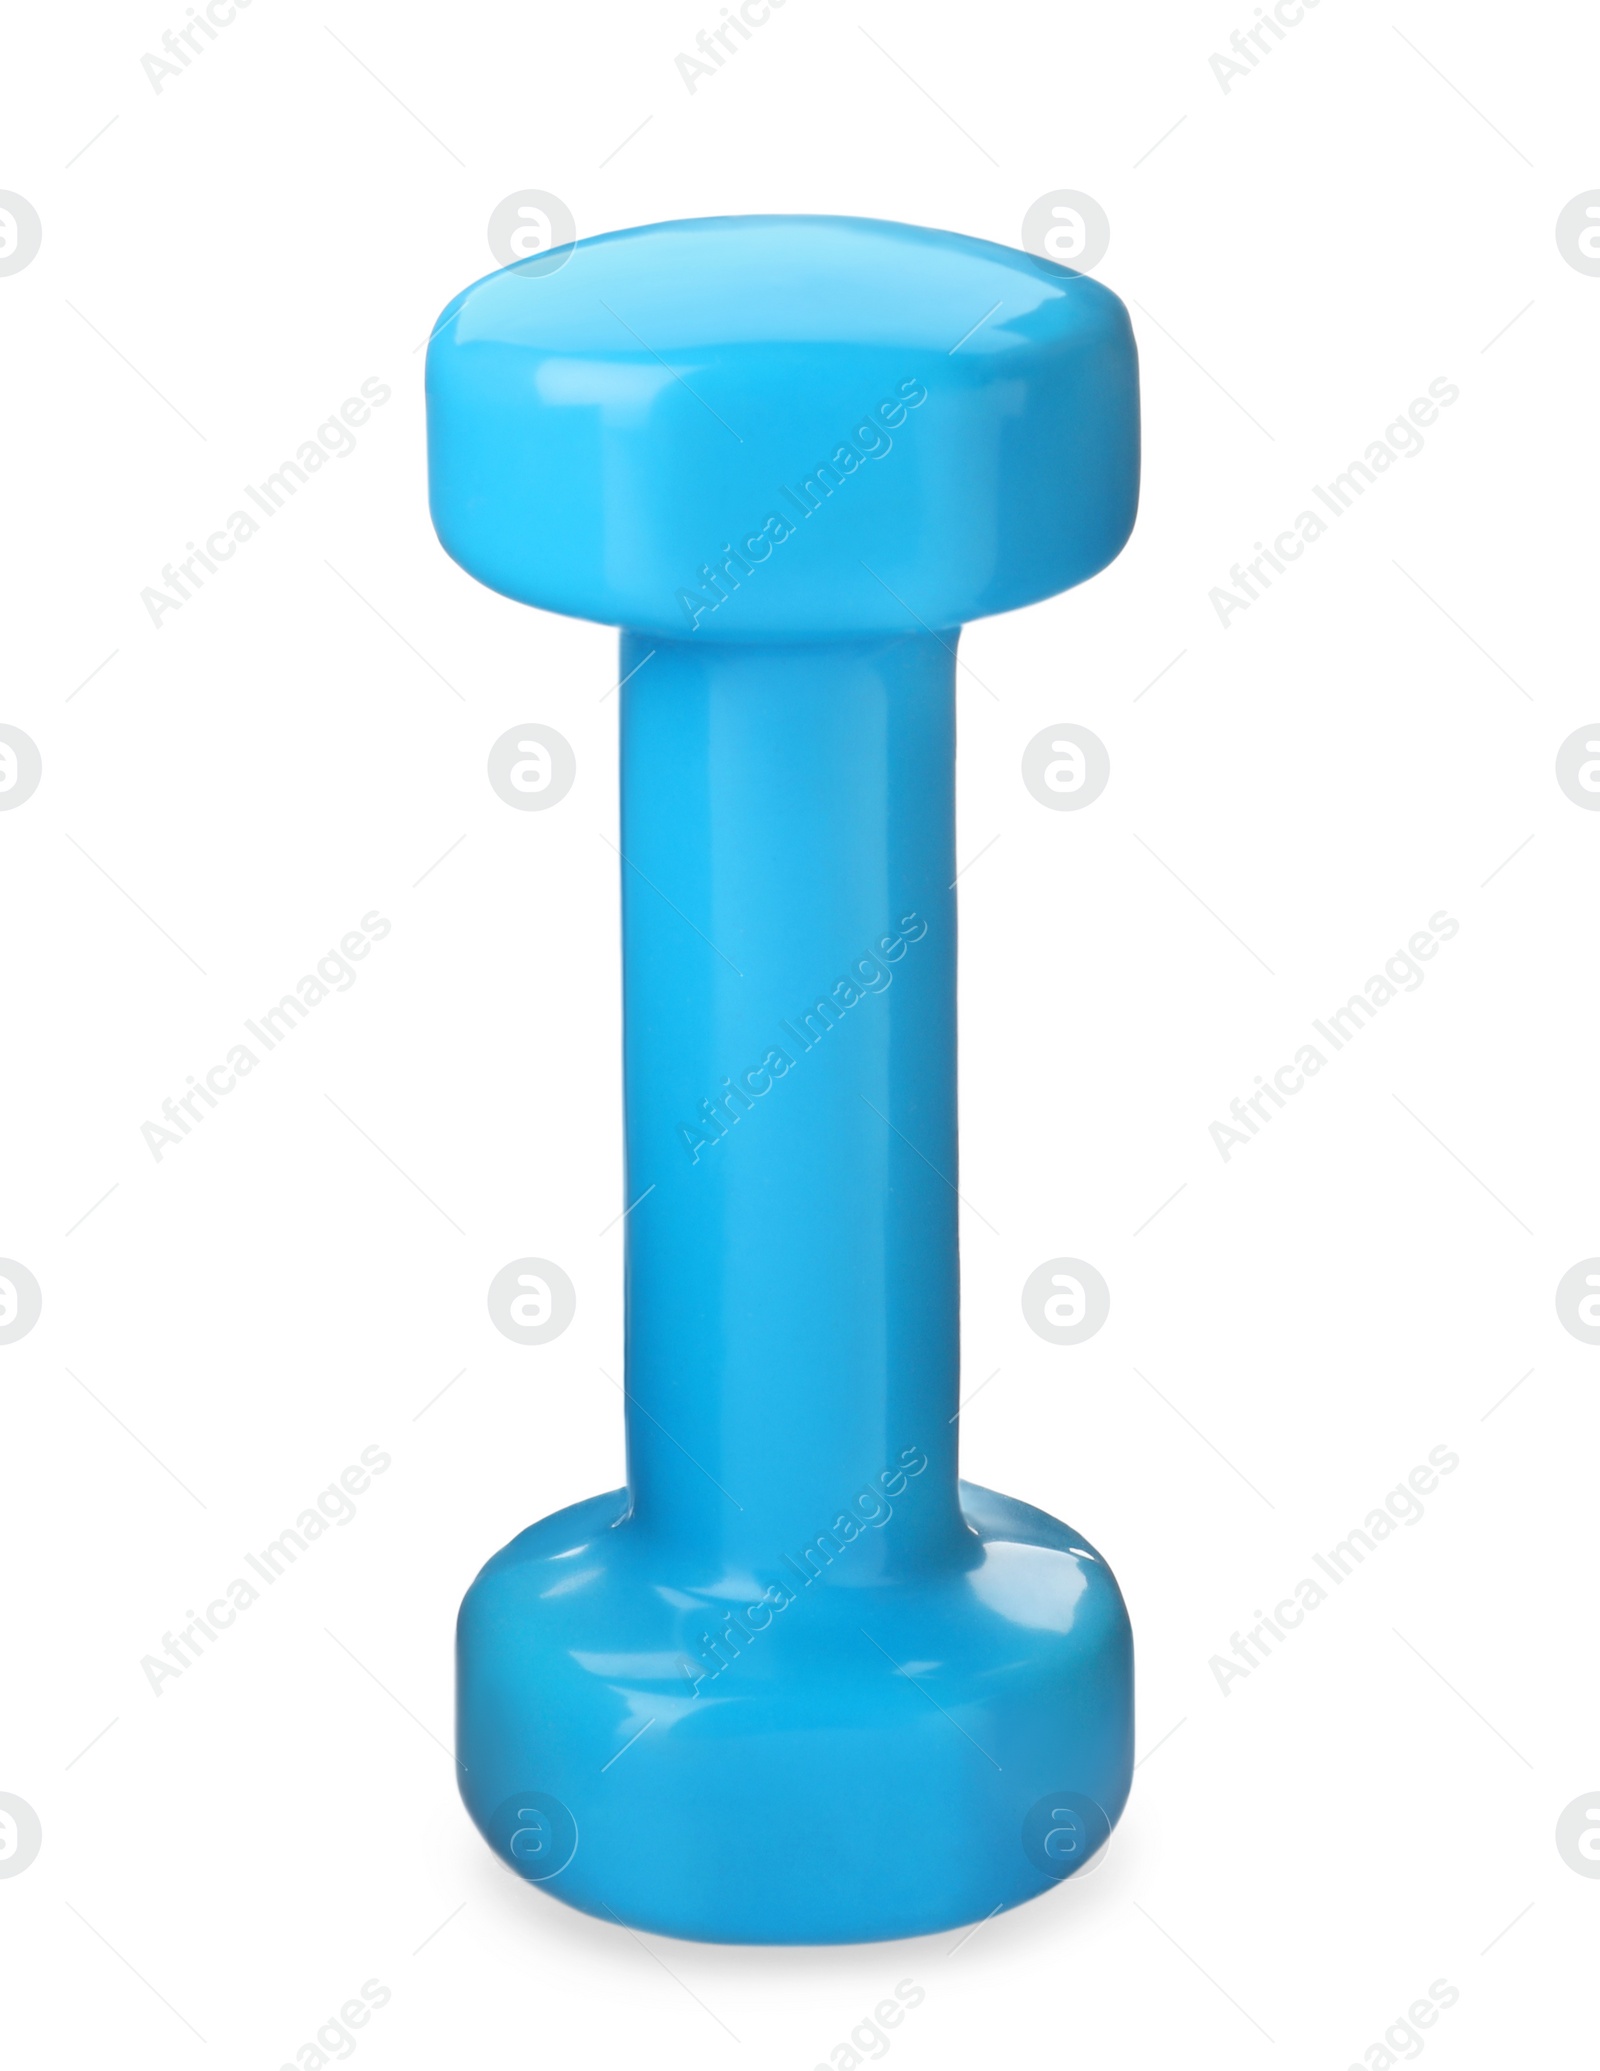 Photo of Light blue dumbbell isolated on white. Weight training equipment